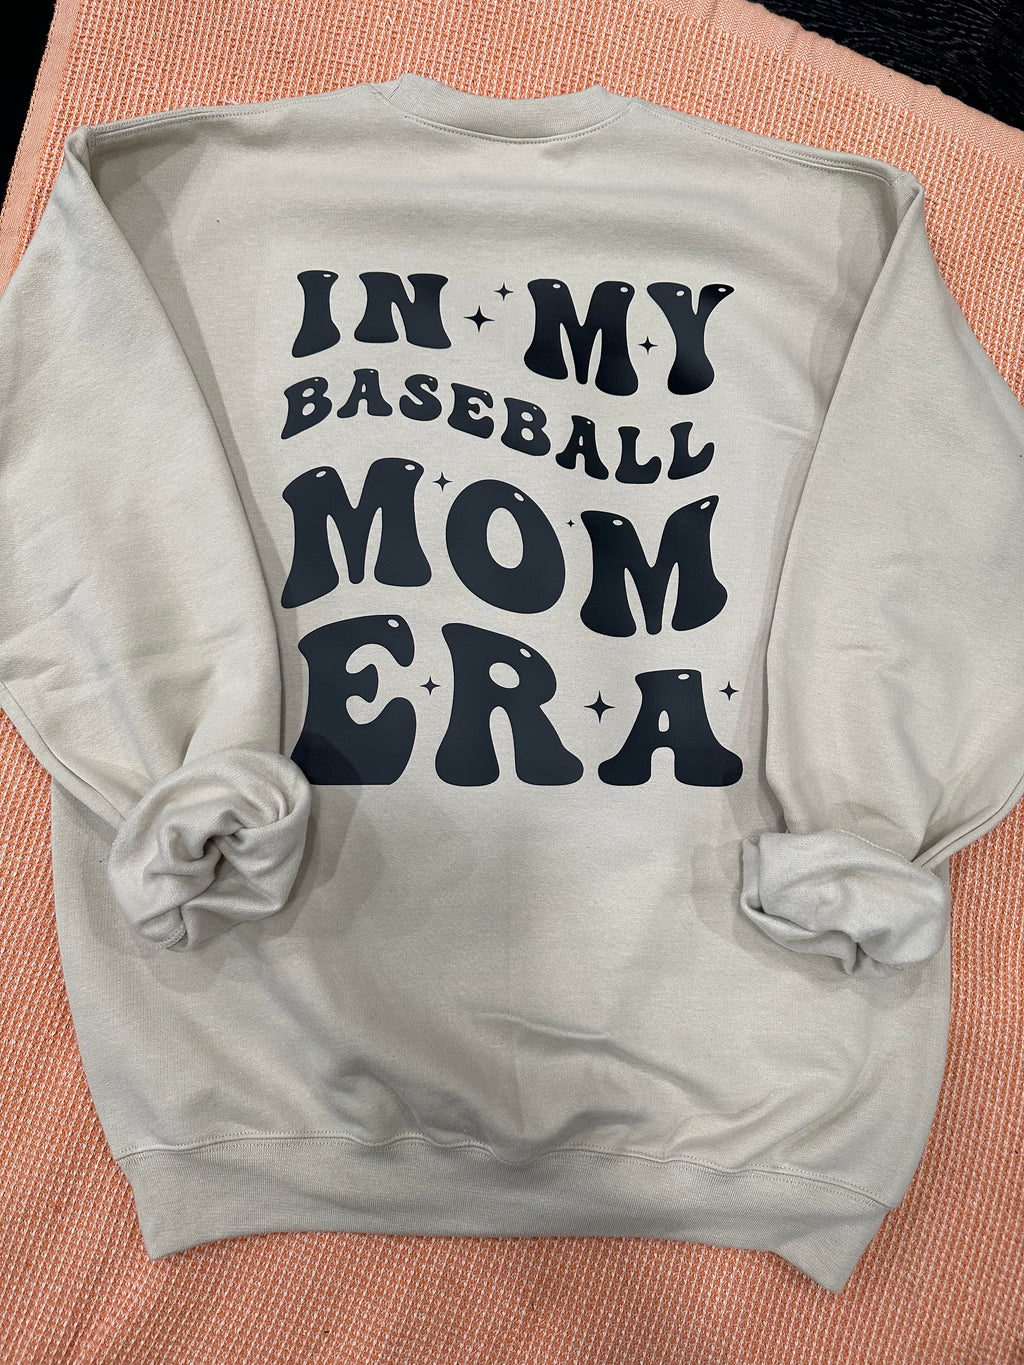 In My Baseball Mom Era Crew Neck-Multiple Color Options